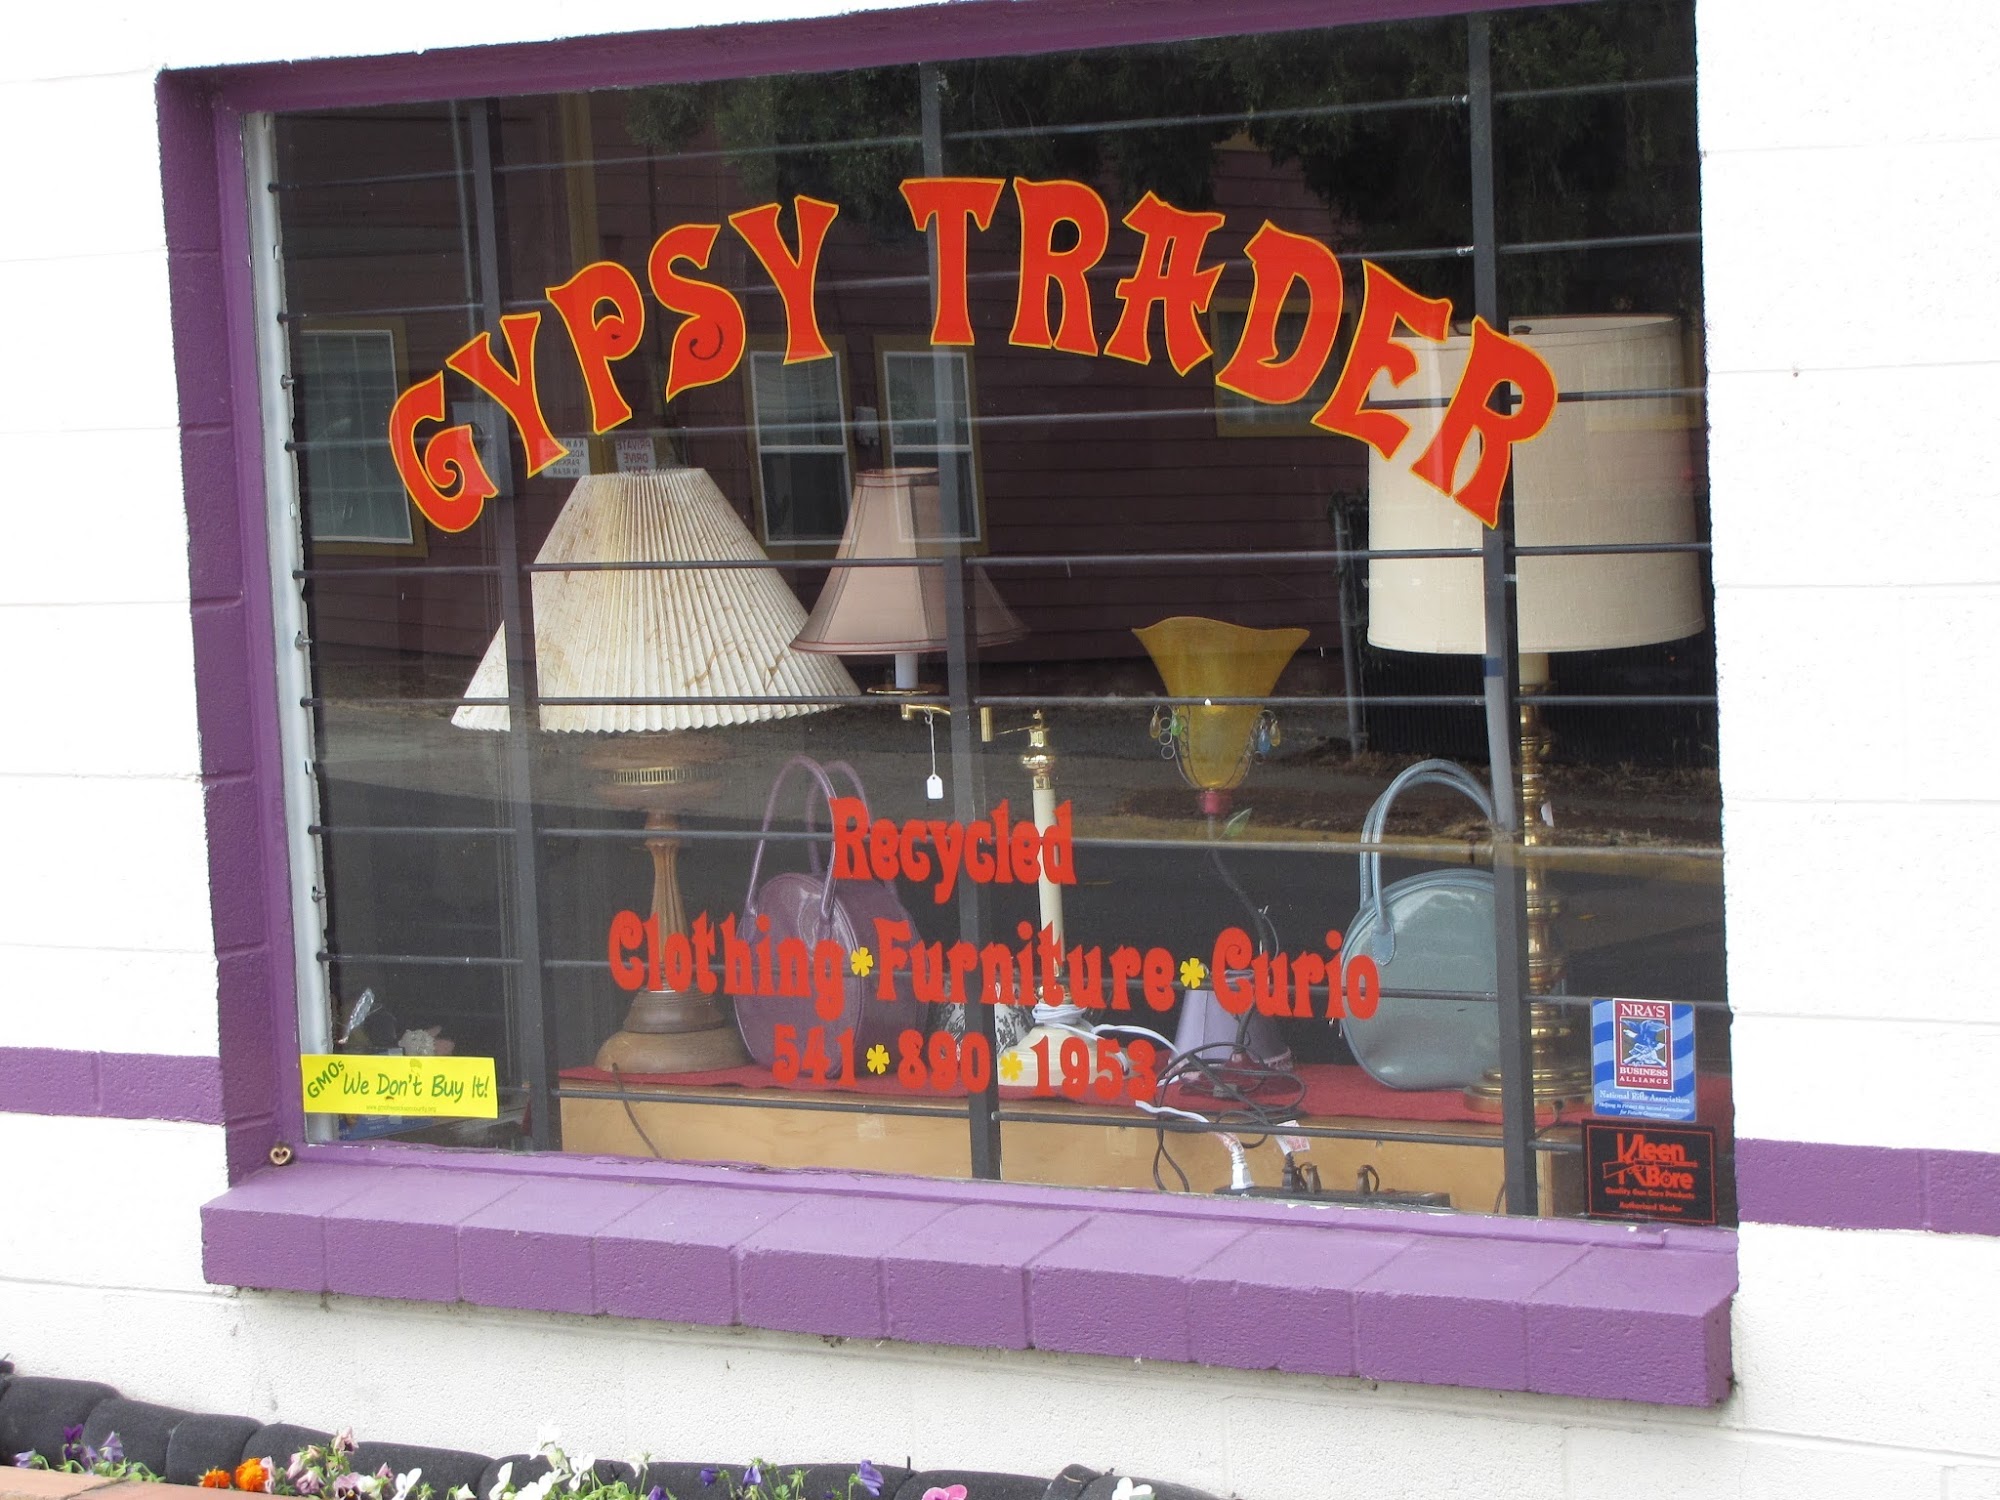 Gypsy Trader